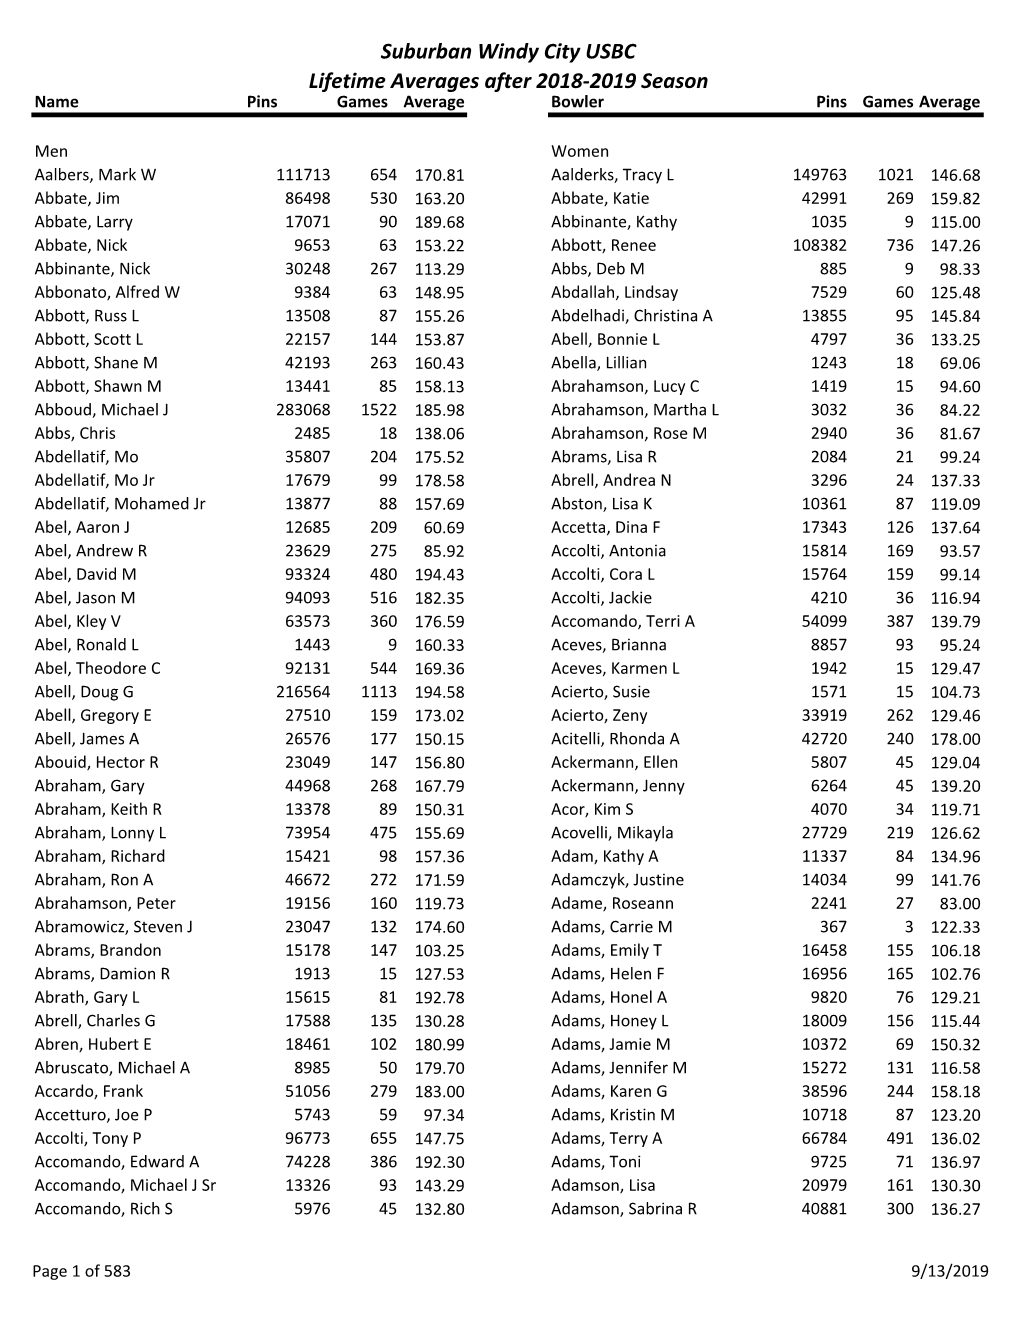 Suburban Windy City USBC Lifetime Averages After 2018‐2019 Season Name Pins Games Average Bowler Pins Games Average